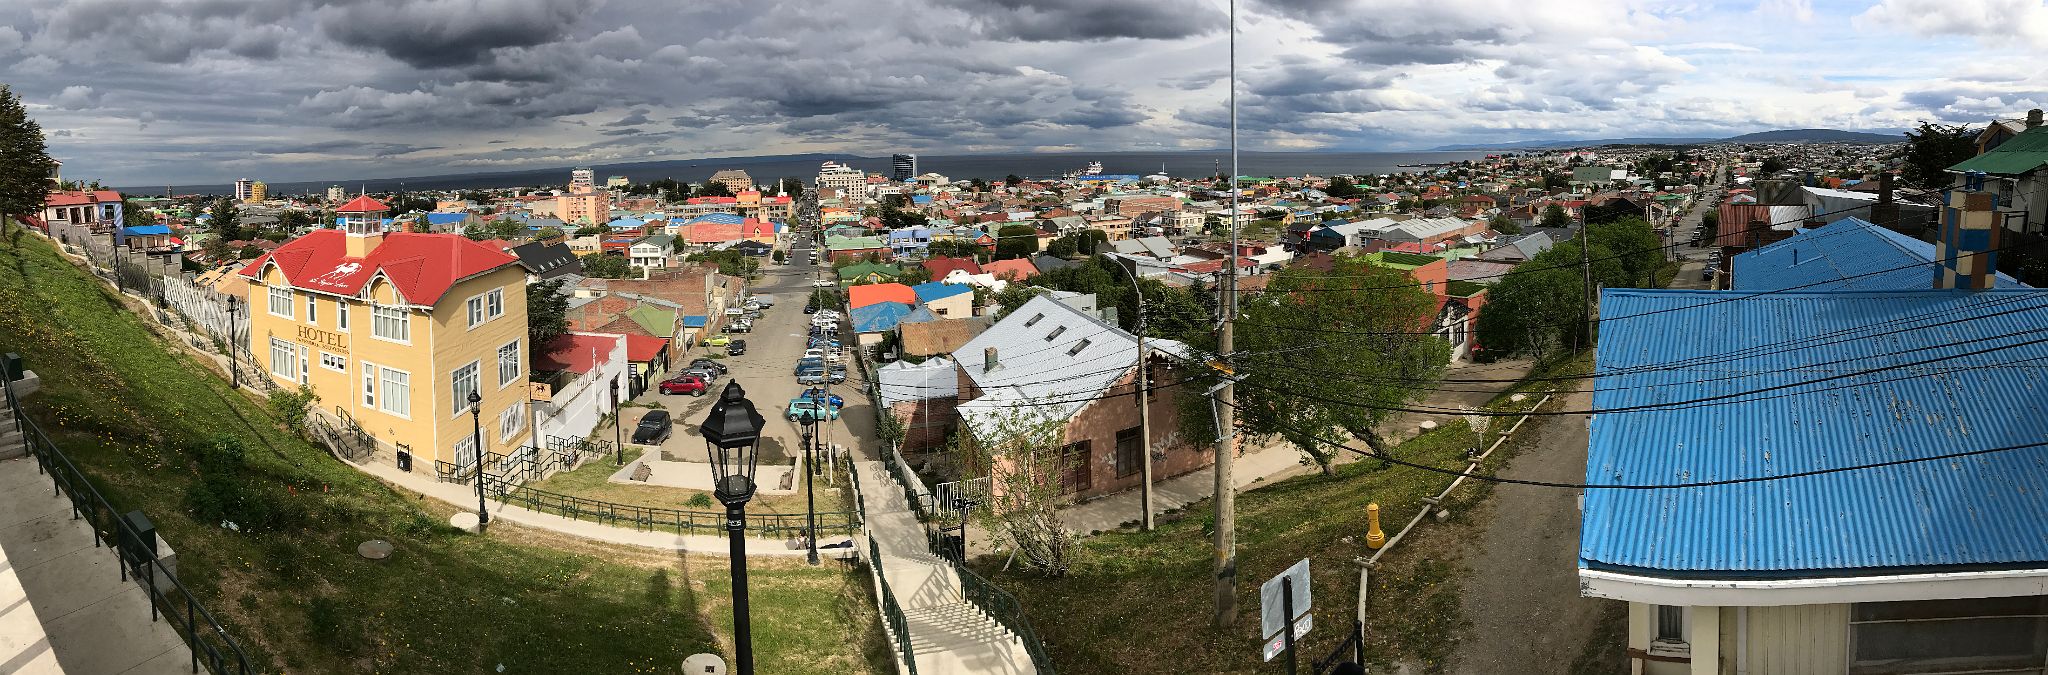 01A Punta Arenas Chile Panoramic View From Mirador Cerro la Cruz Viewpoint